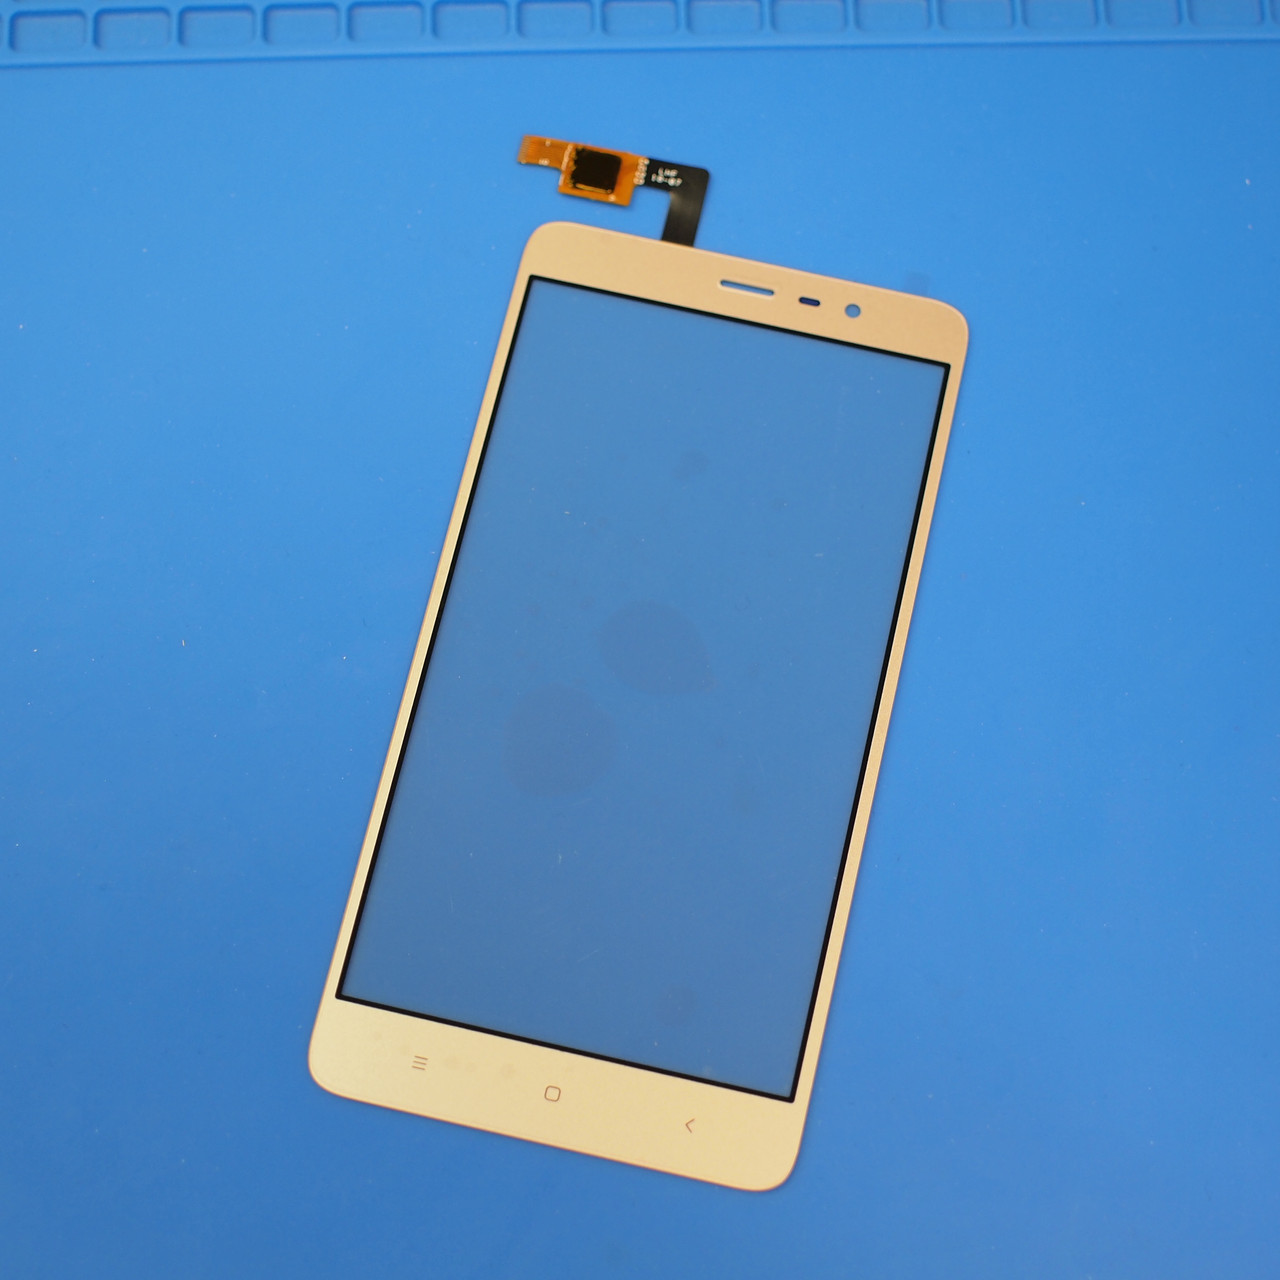 Xiaomi Redmi Note 3 - Замена стекла и сенсорного экрана